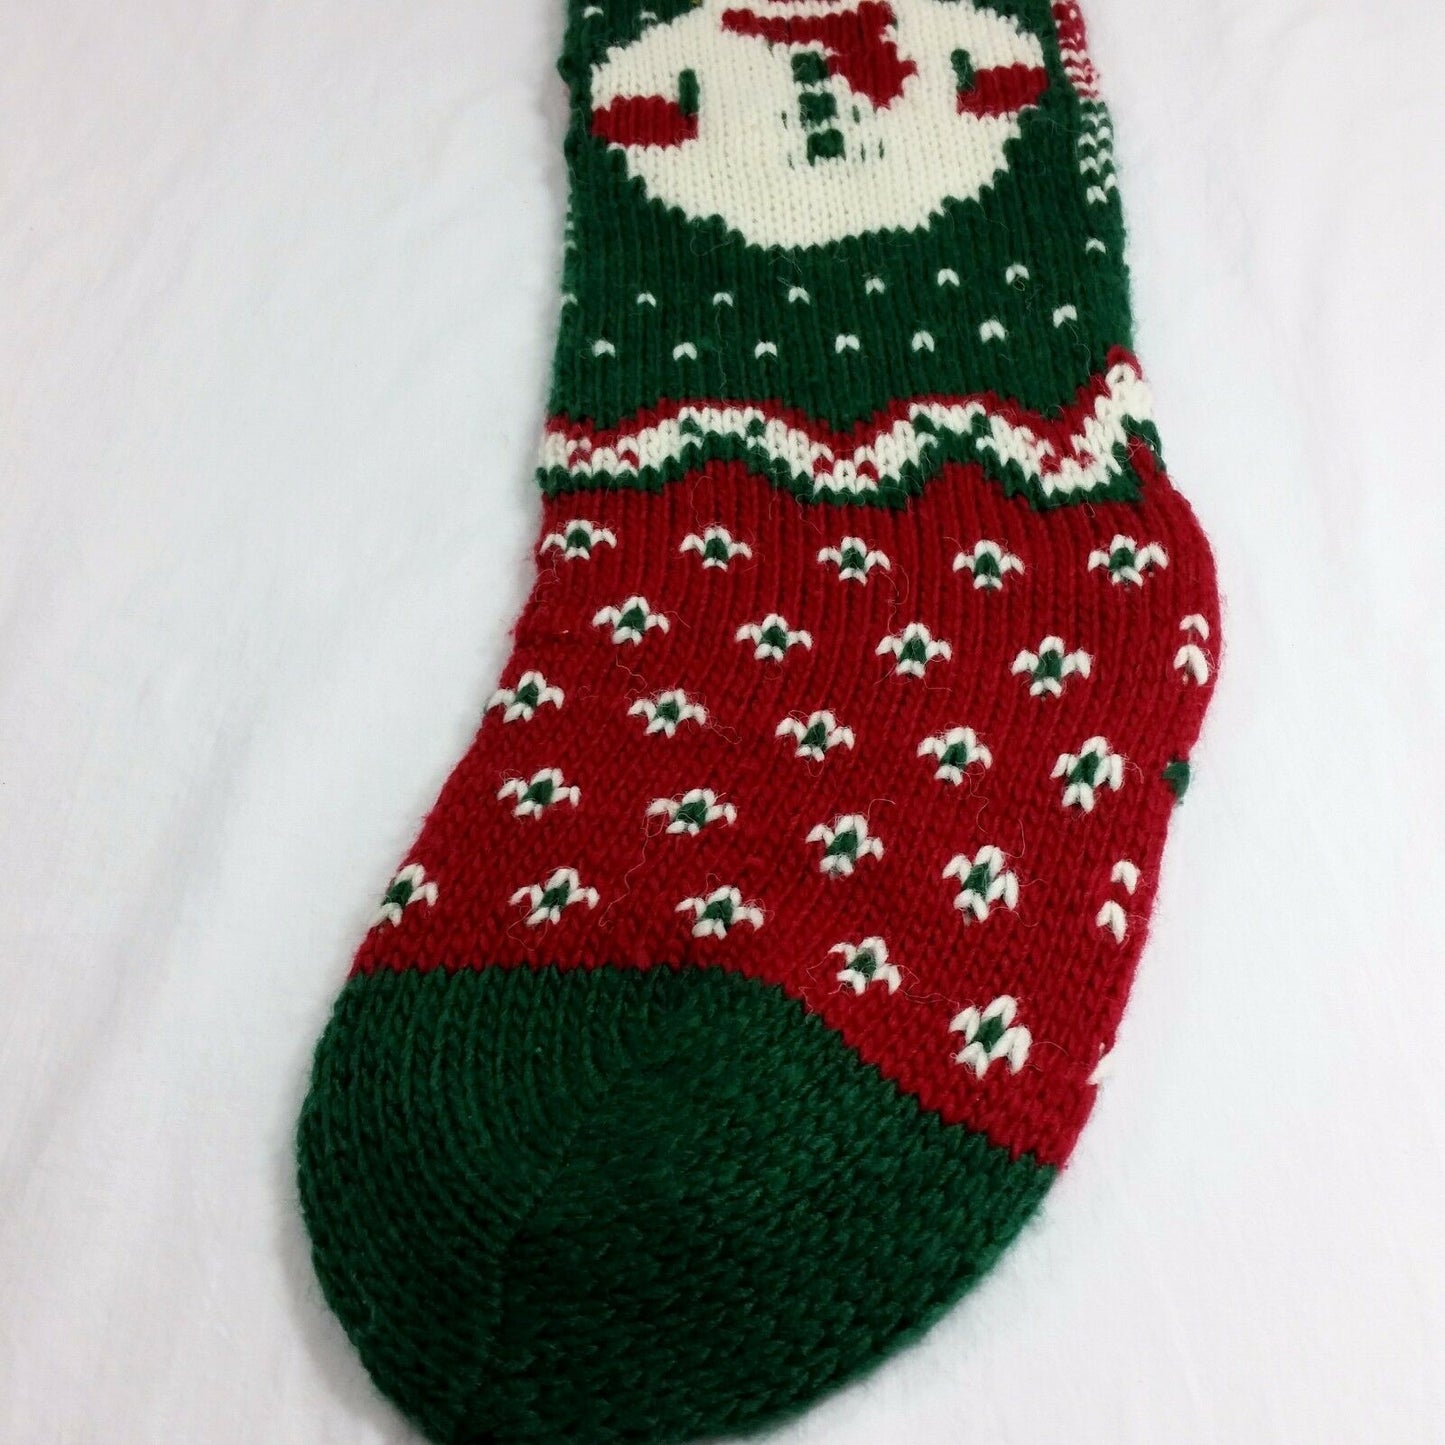 Vintage Snowman Stocking Knit Christmas Pom Pom Fuzzy Red Green White - At Grandma's Table